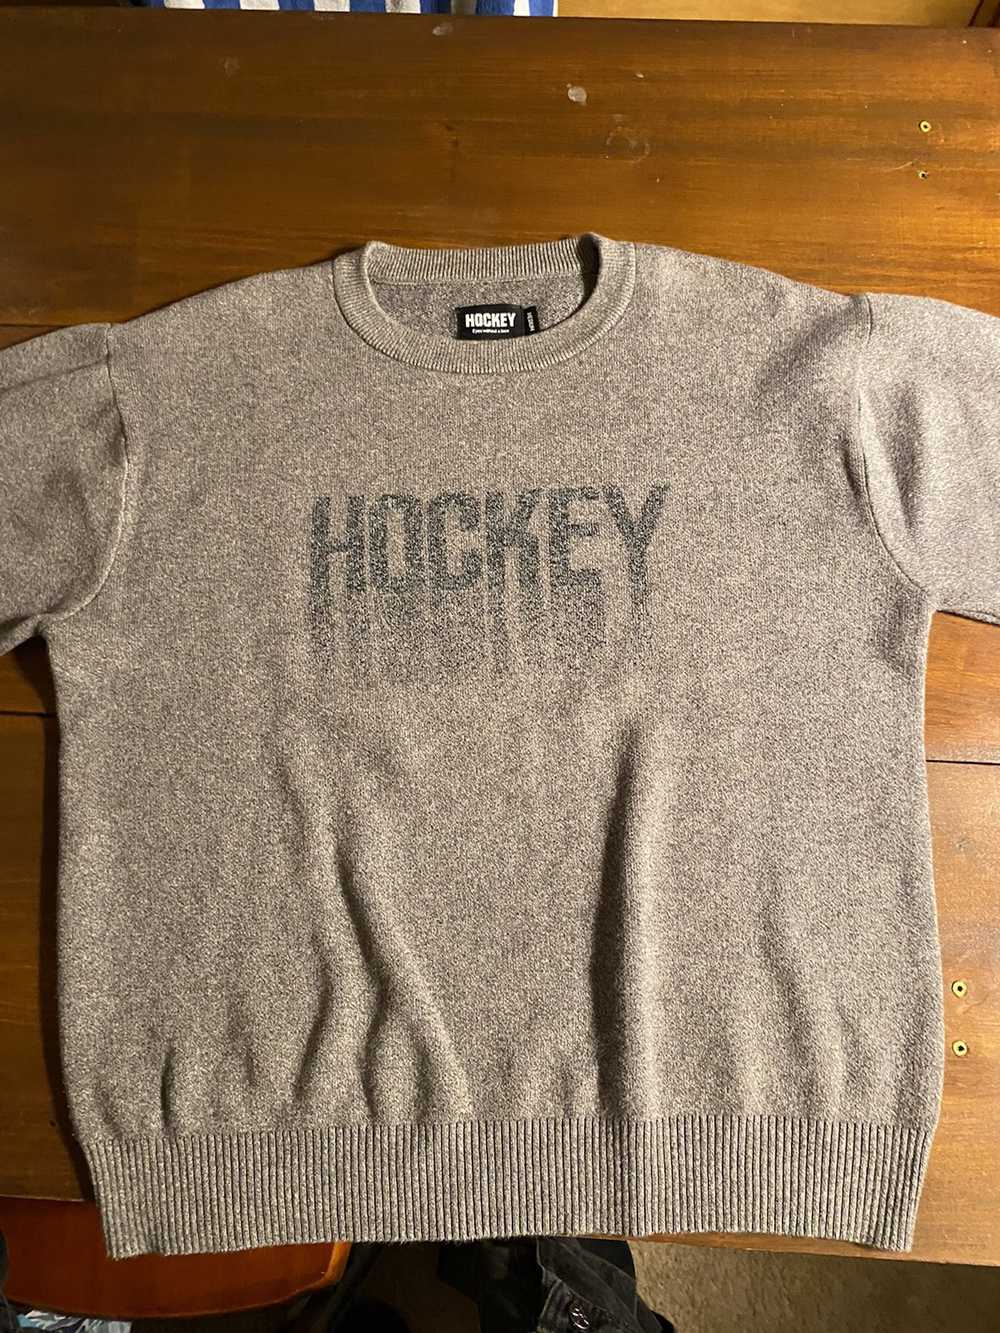 Hockey hockey sweater - image 2